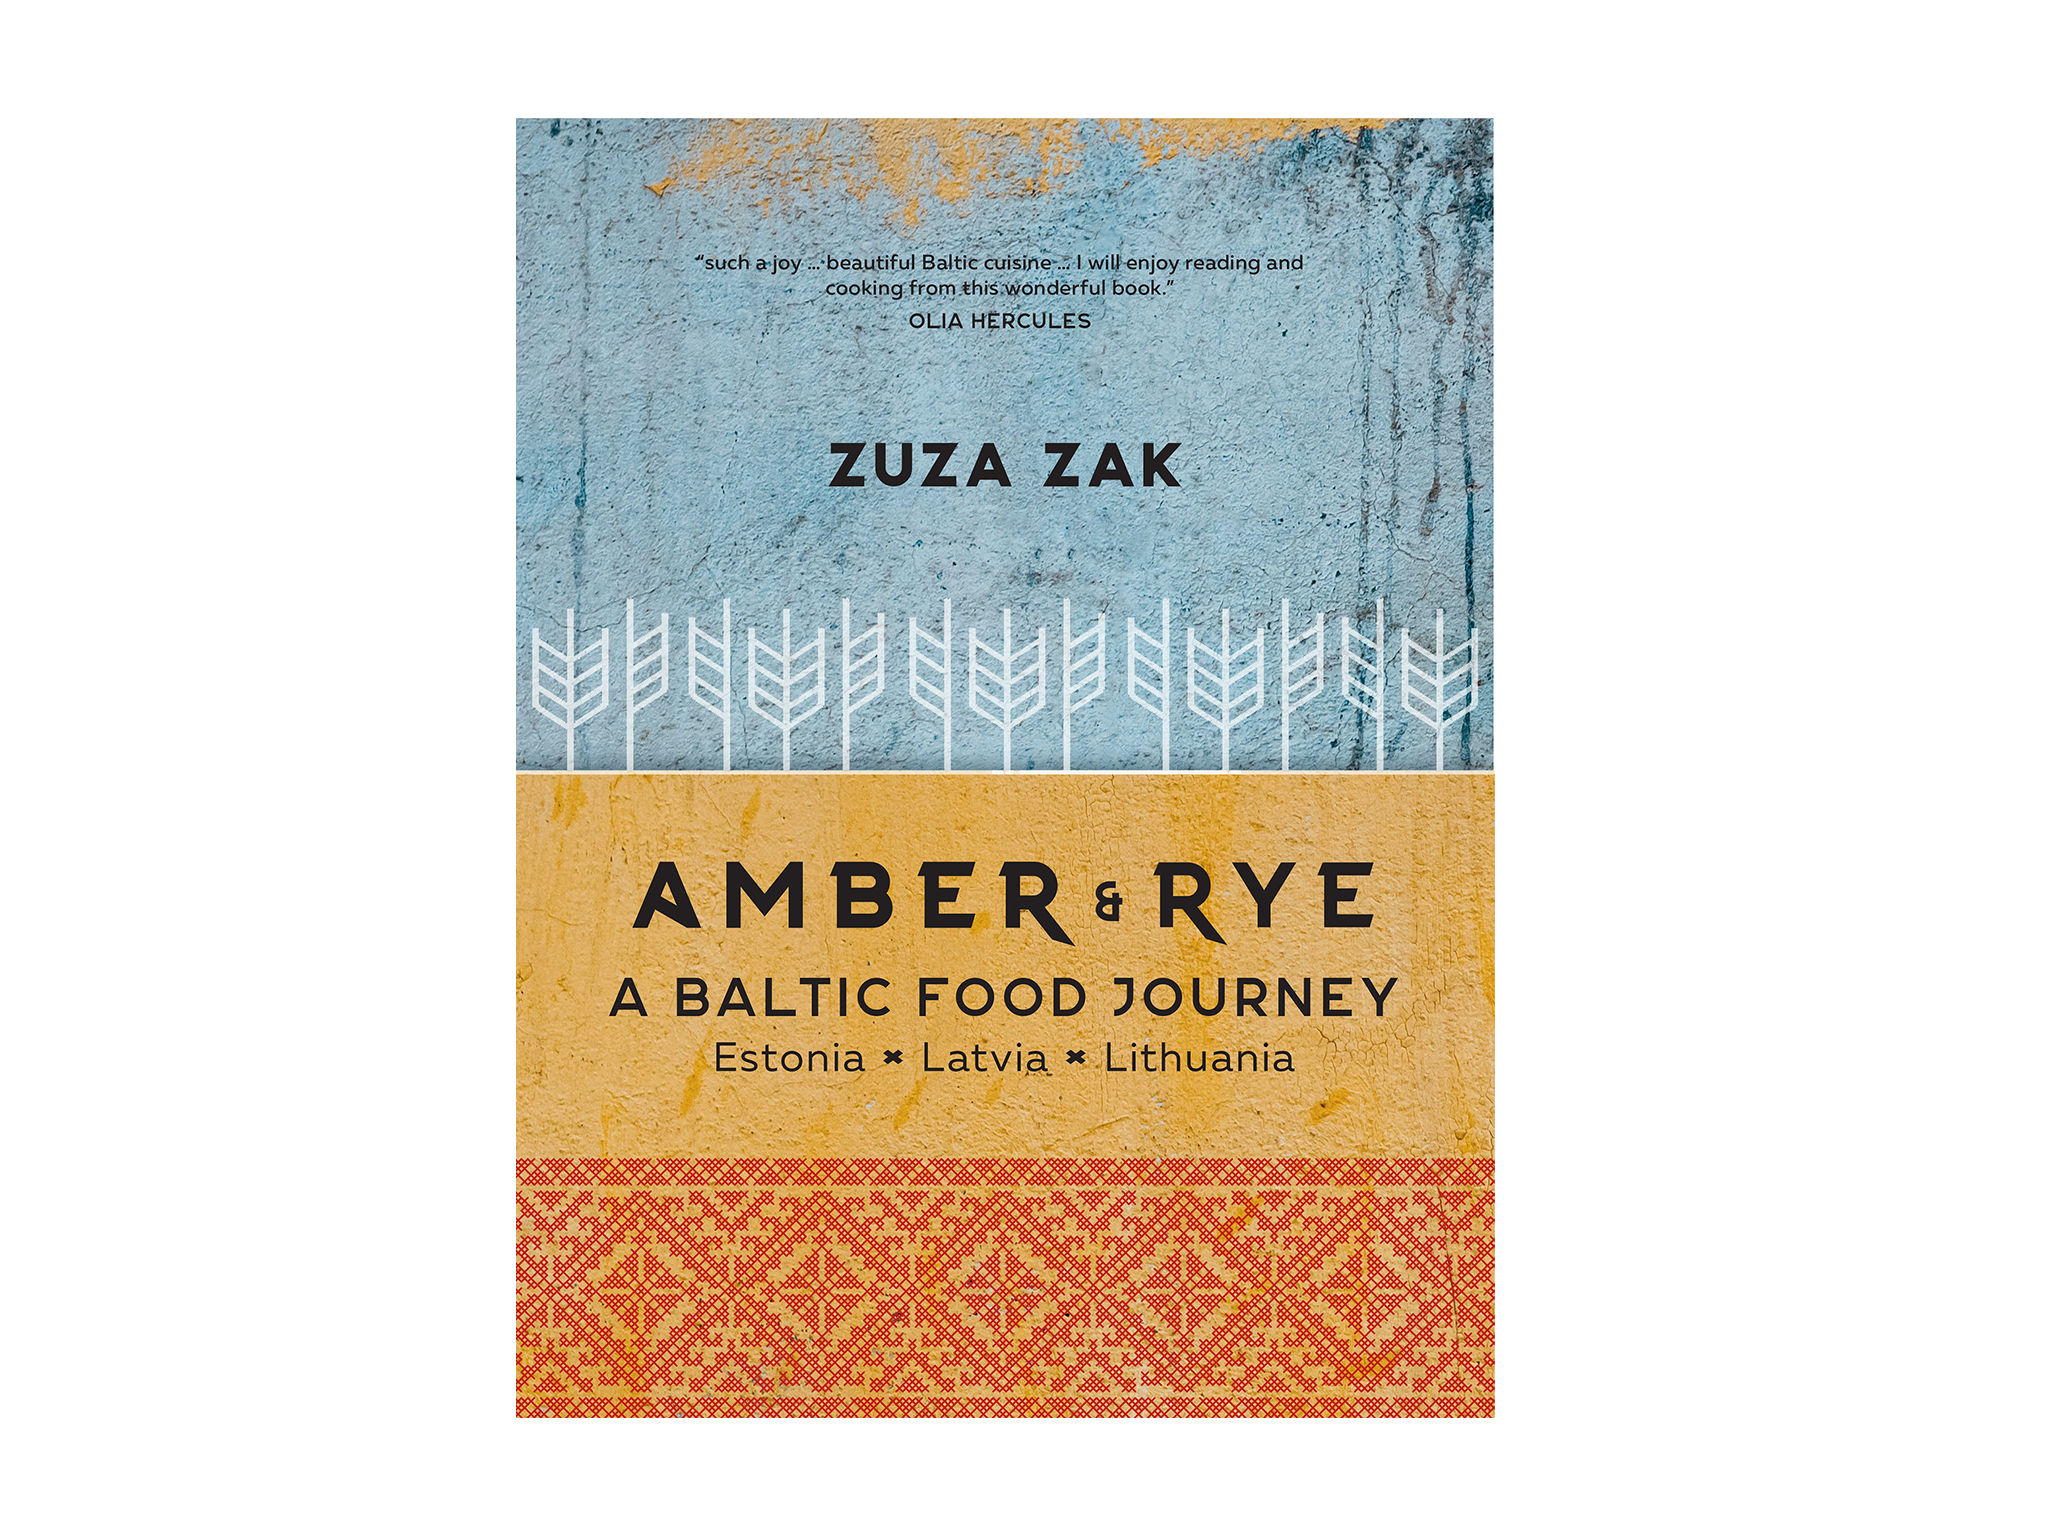 ‘Amber & Rye: A Baltic Food Journey’ by Zuza Zak, published by Murdoch